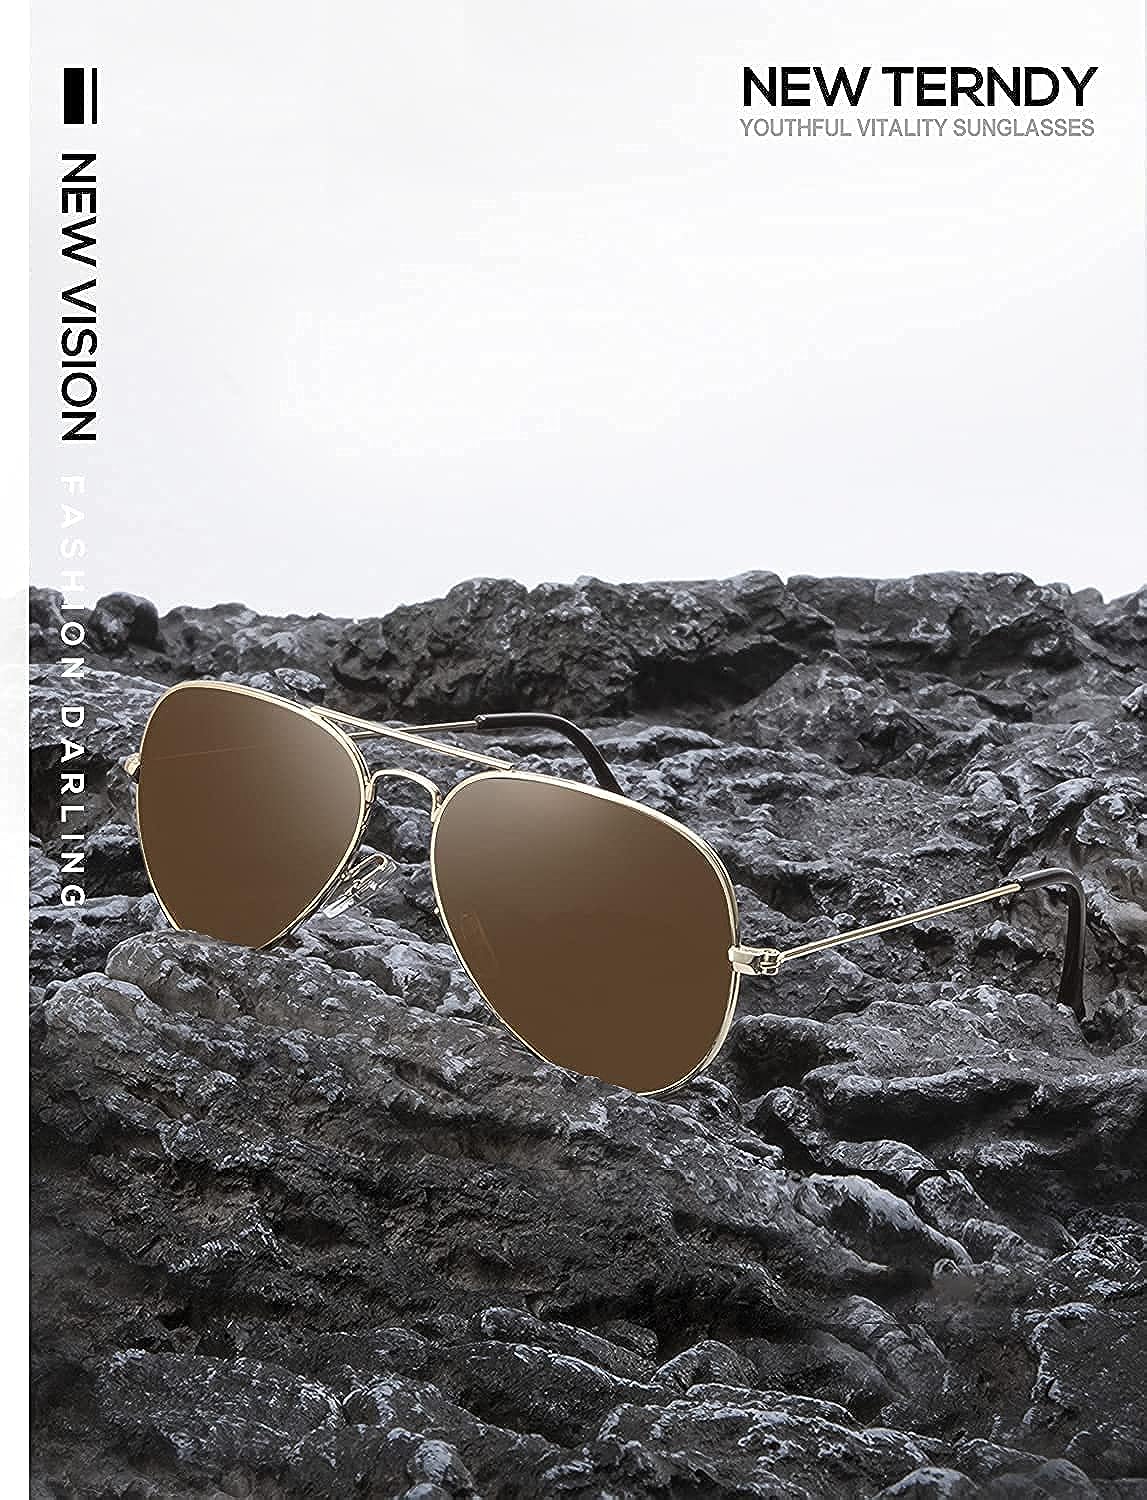 Buy GAINX Rectangular Branded Latest and Stylish Sunglasses, 100% UV  Protected, Men & Women, Medium